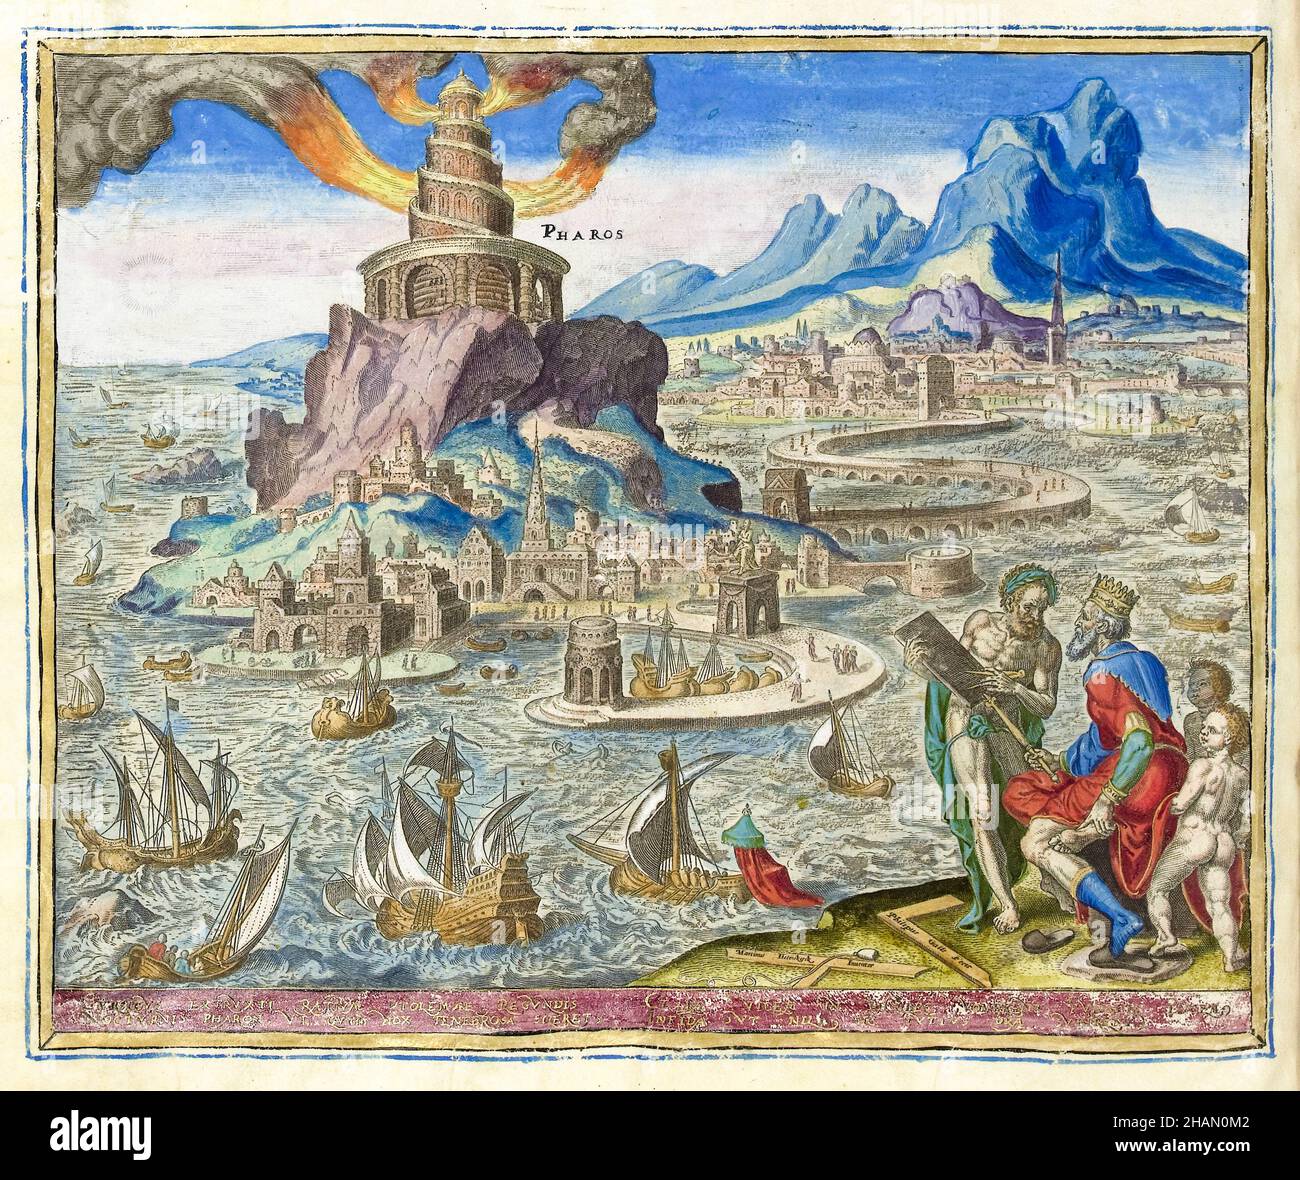 Faro di Alessandria (Pharos di Alessandria), incisione di Philips Galle dopo Maarten van Heemskerck, 1572 Foto Stock